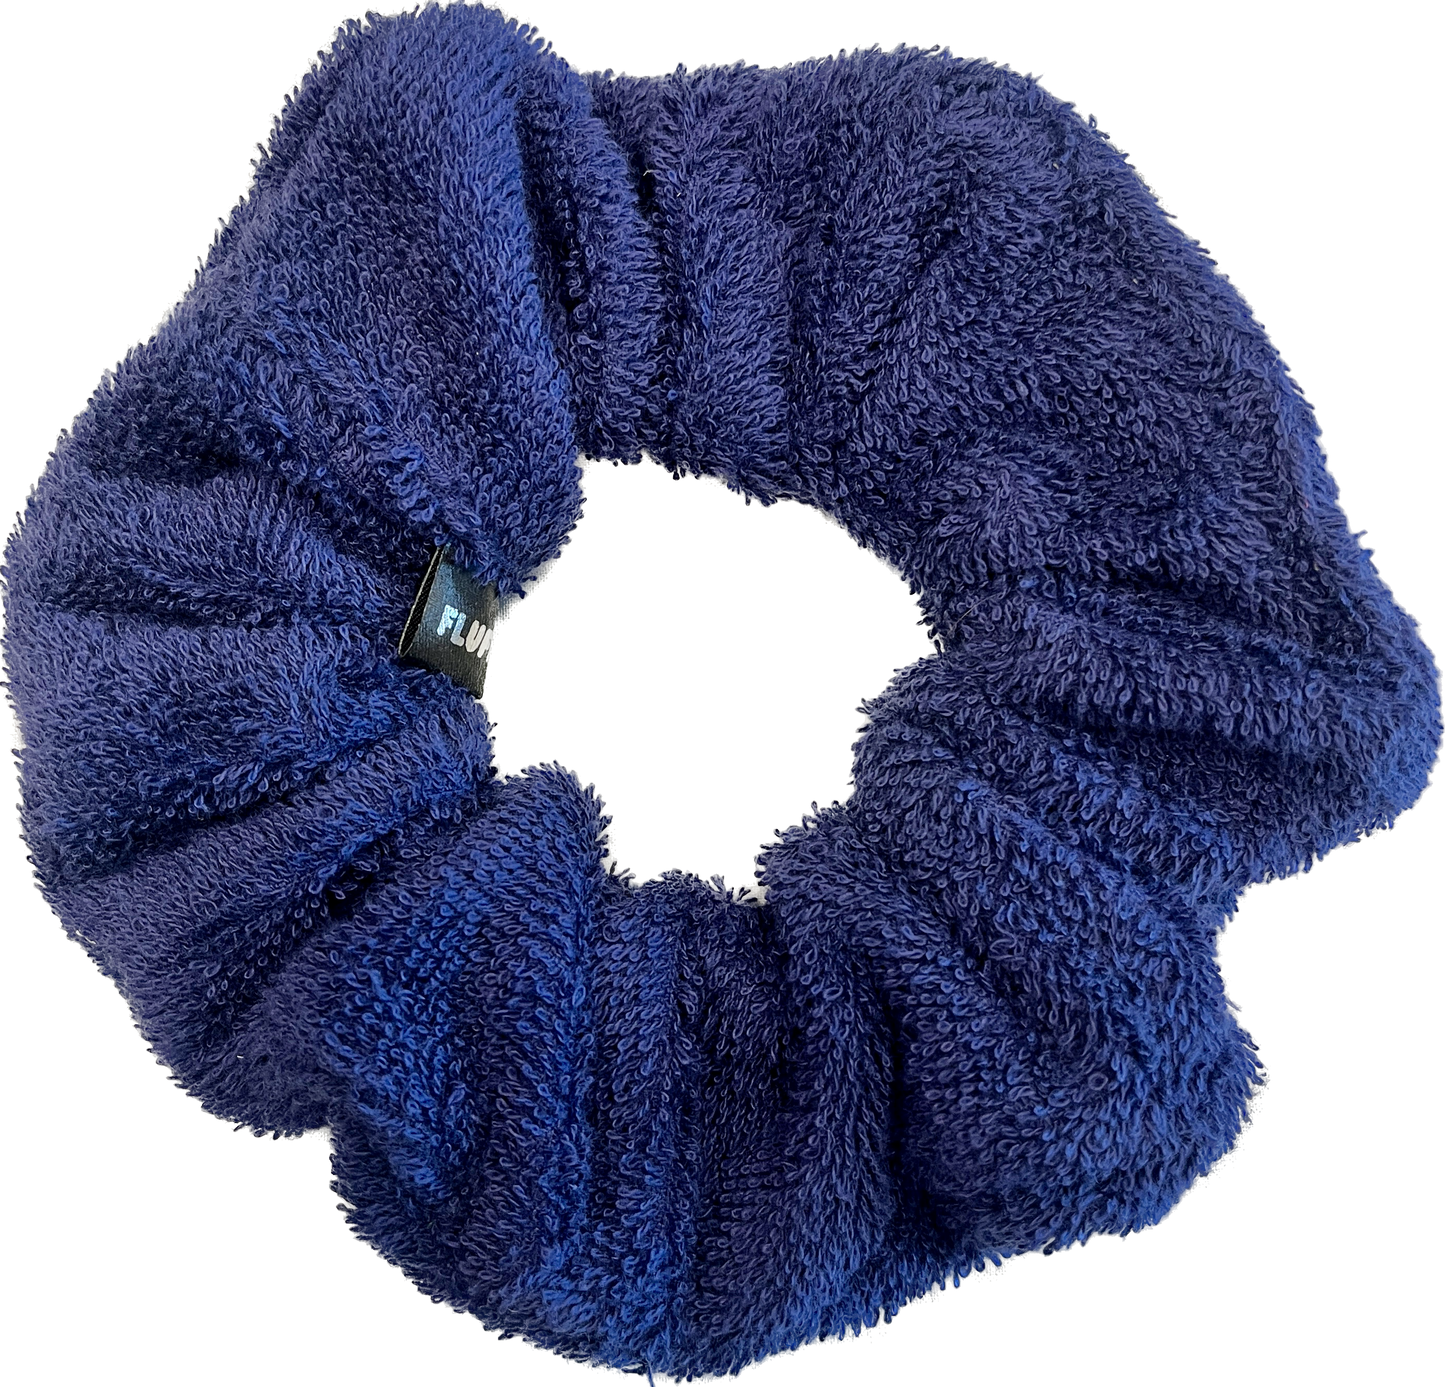 Navy Blue Towel Scrunchie